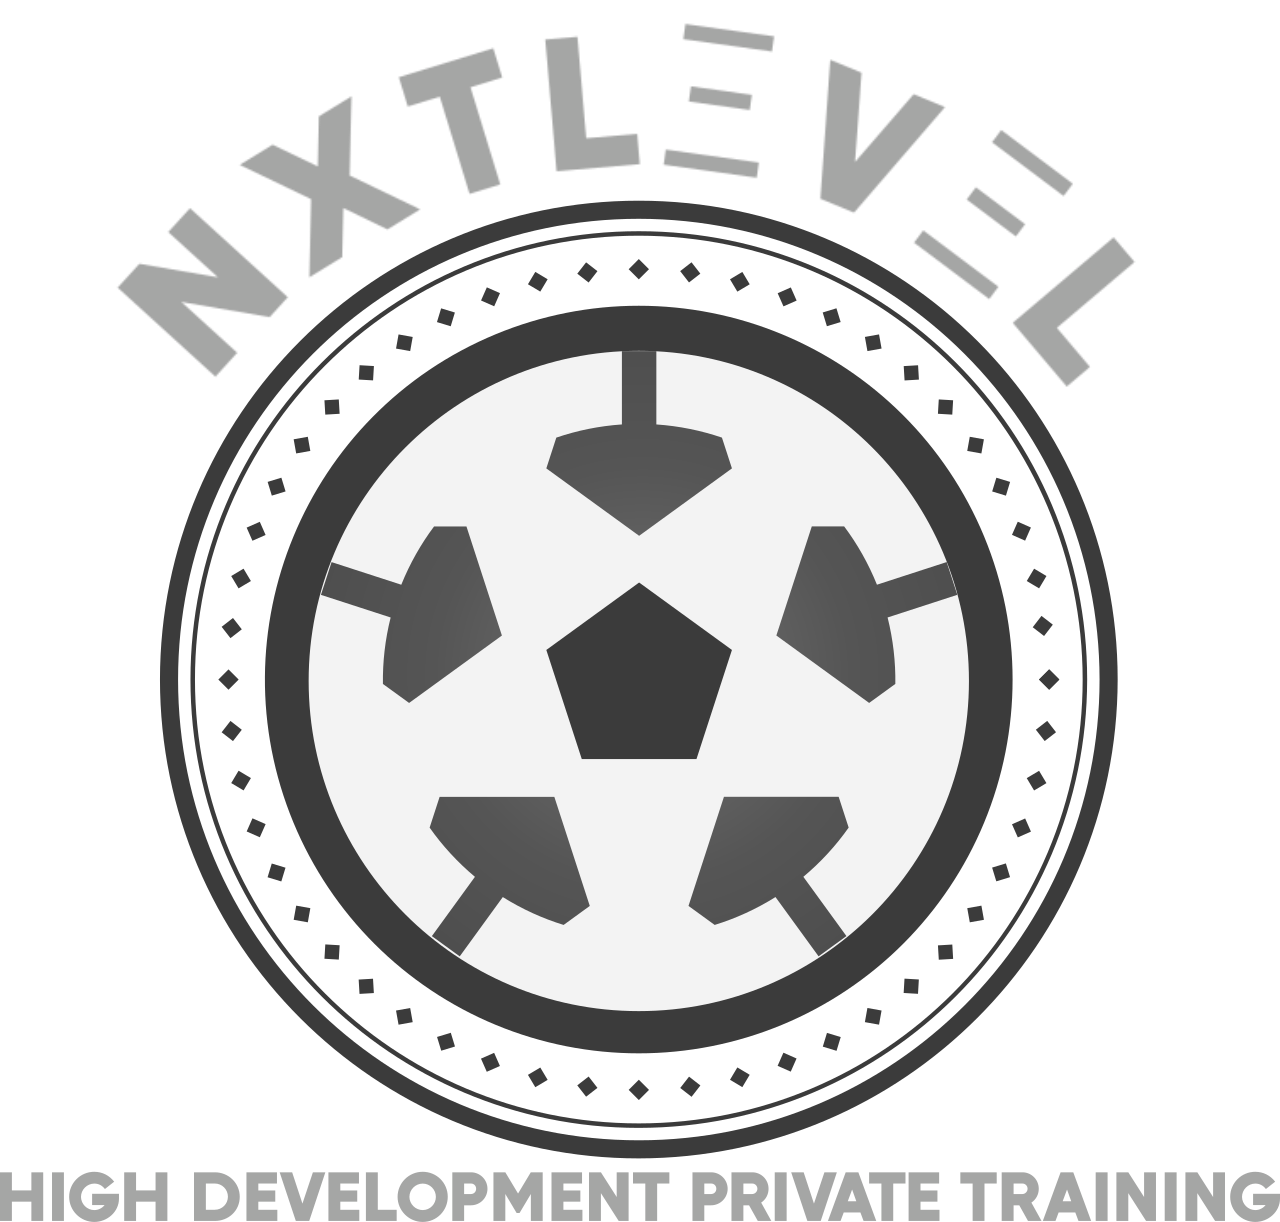 NXTLΞVΞL's logo